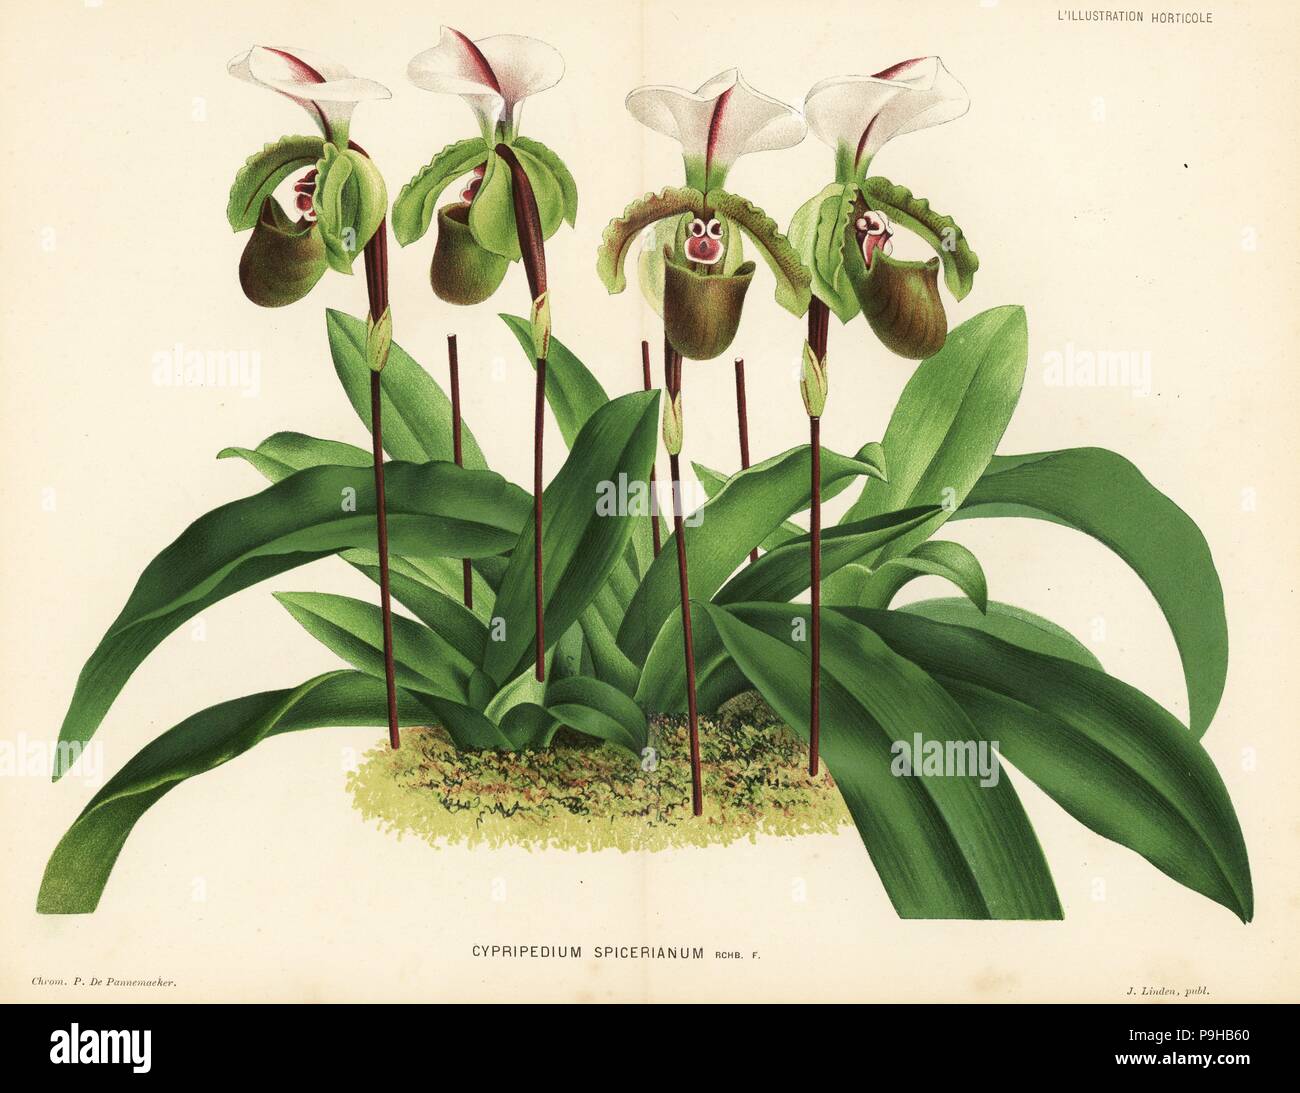 Paphiopedilum spicerianum orchid (Cypripedium spicerianum). Chromolithograph by P. de Pannemaeker from Jean Linden's l'Illustration Horticole, Brussels, 1883. Stock Photo